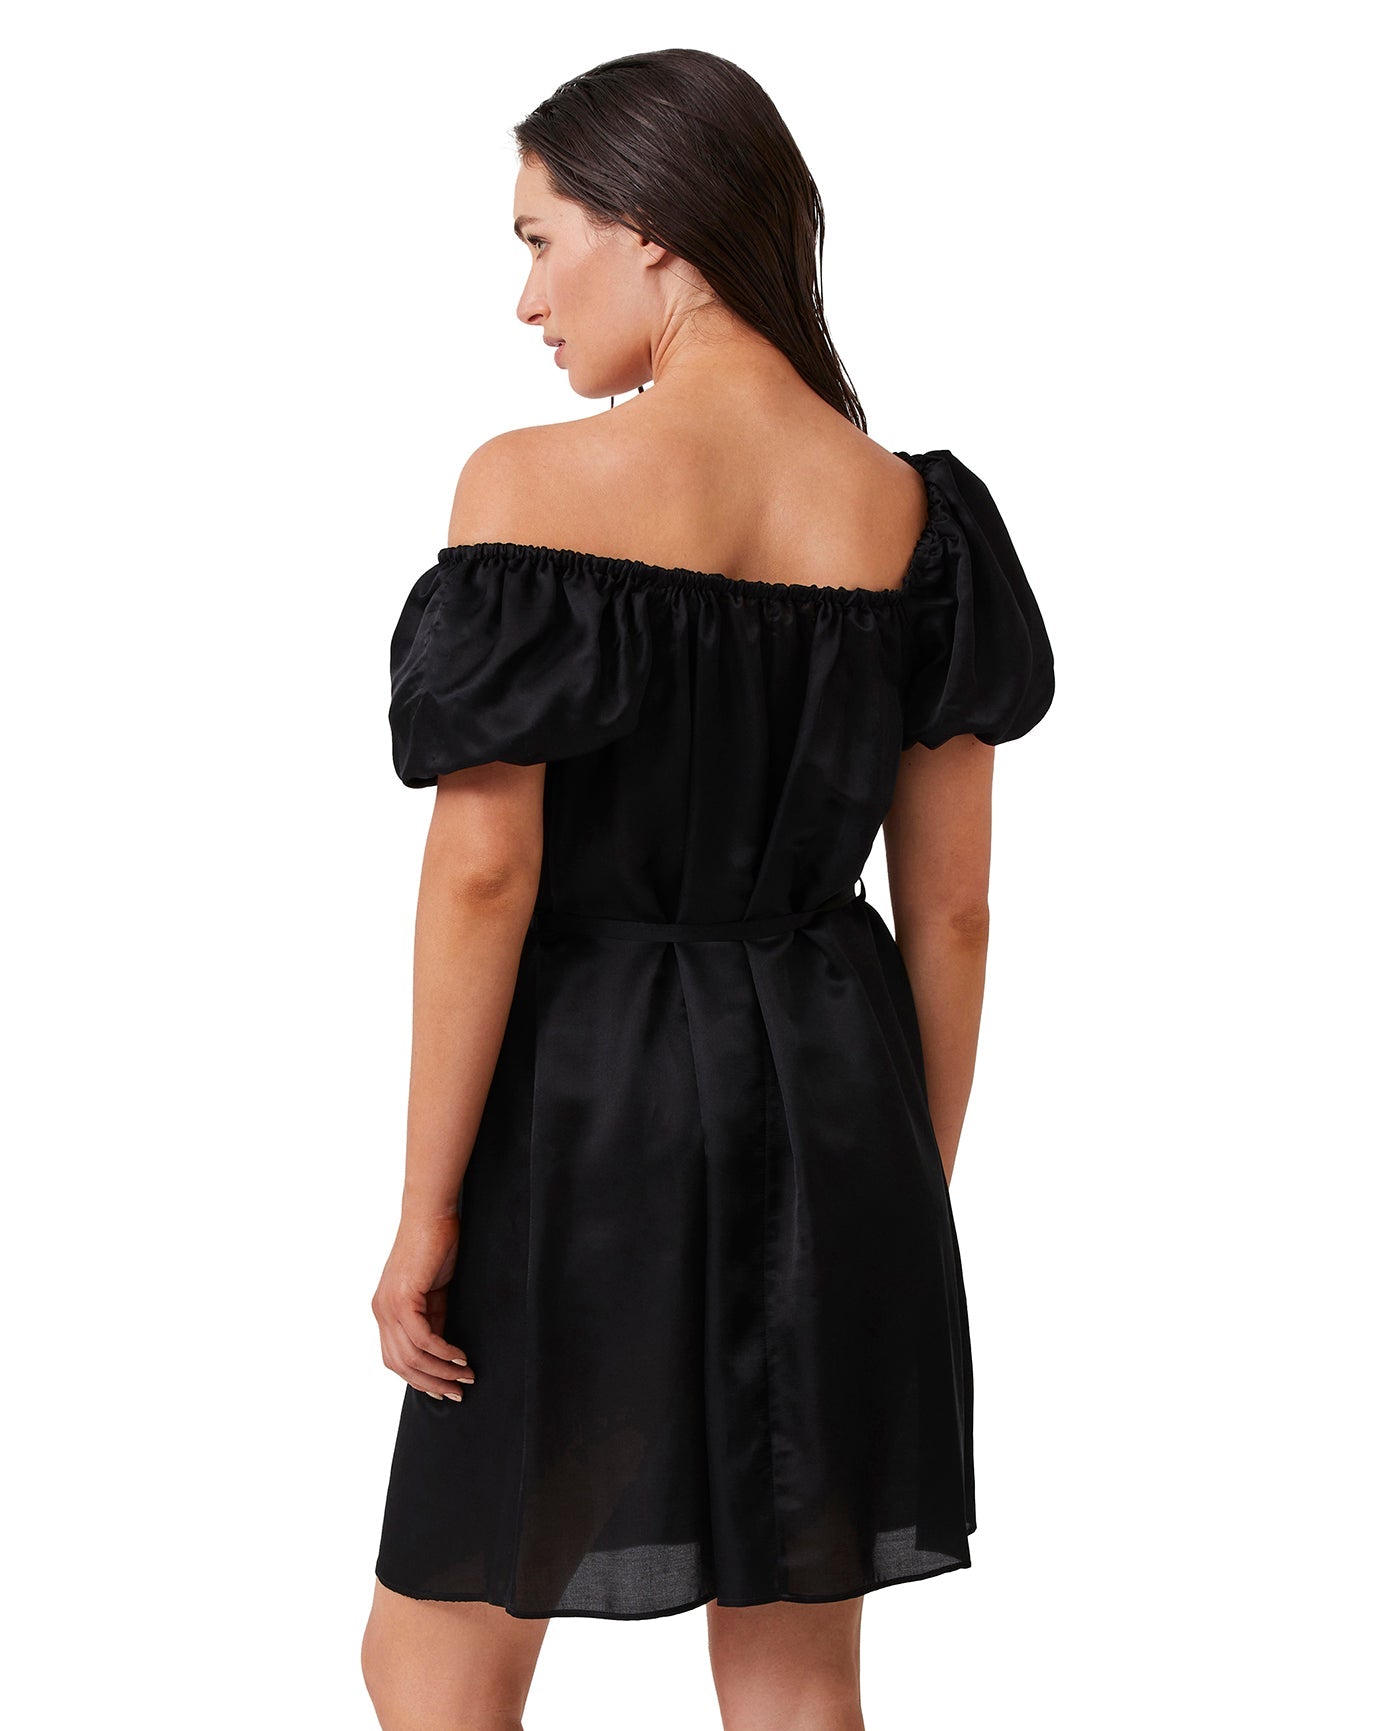 Back View Of Luma Puff Sleeve Dress Cover Up | LUMA BLACK